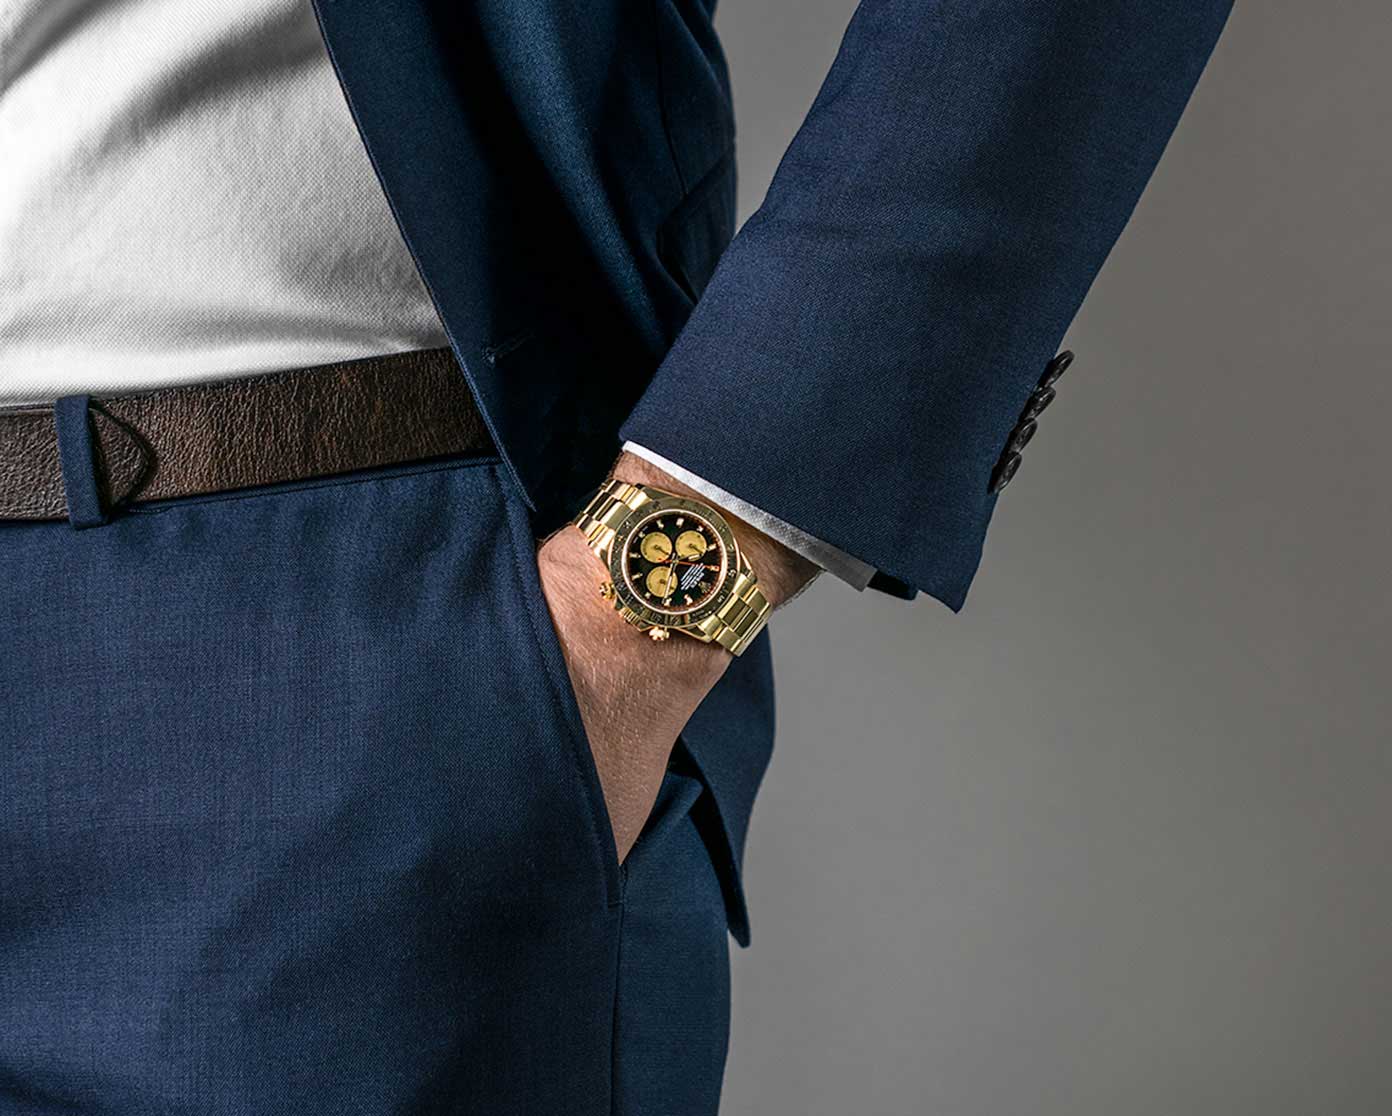 Shop Men's Luxury Watches